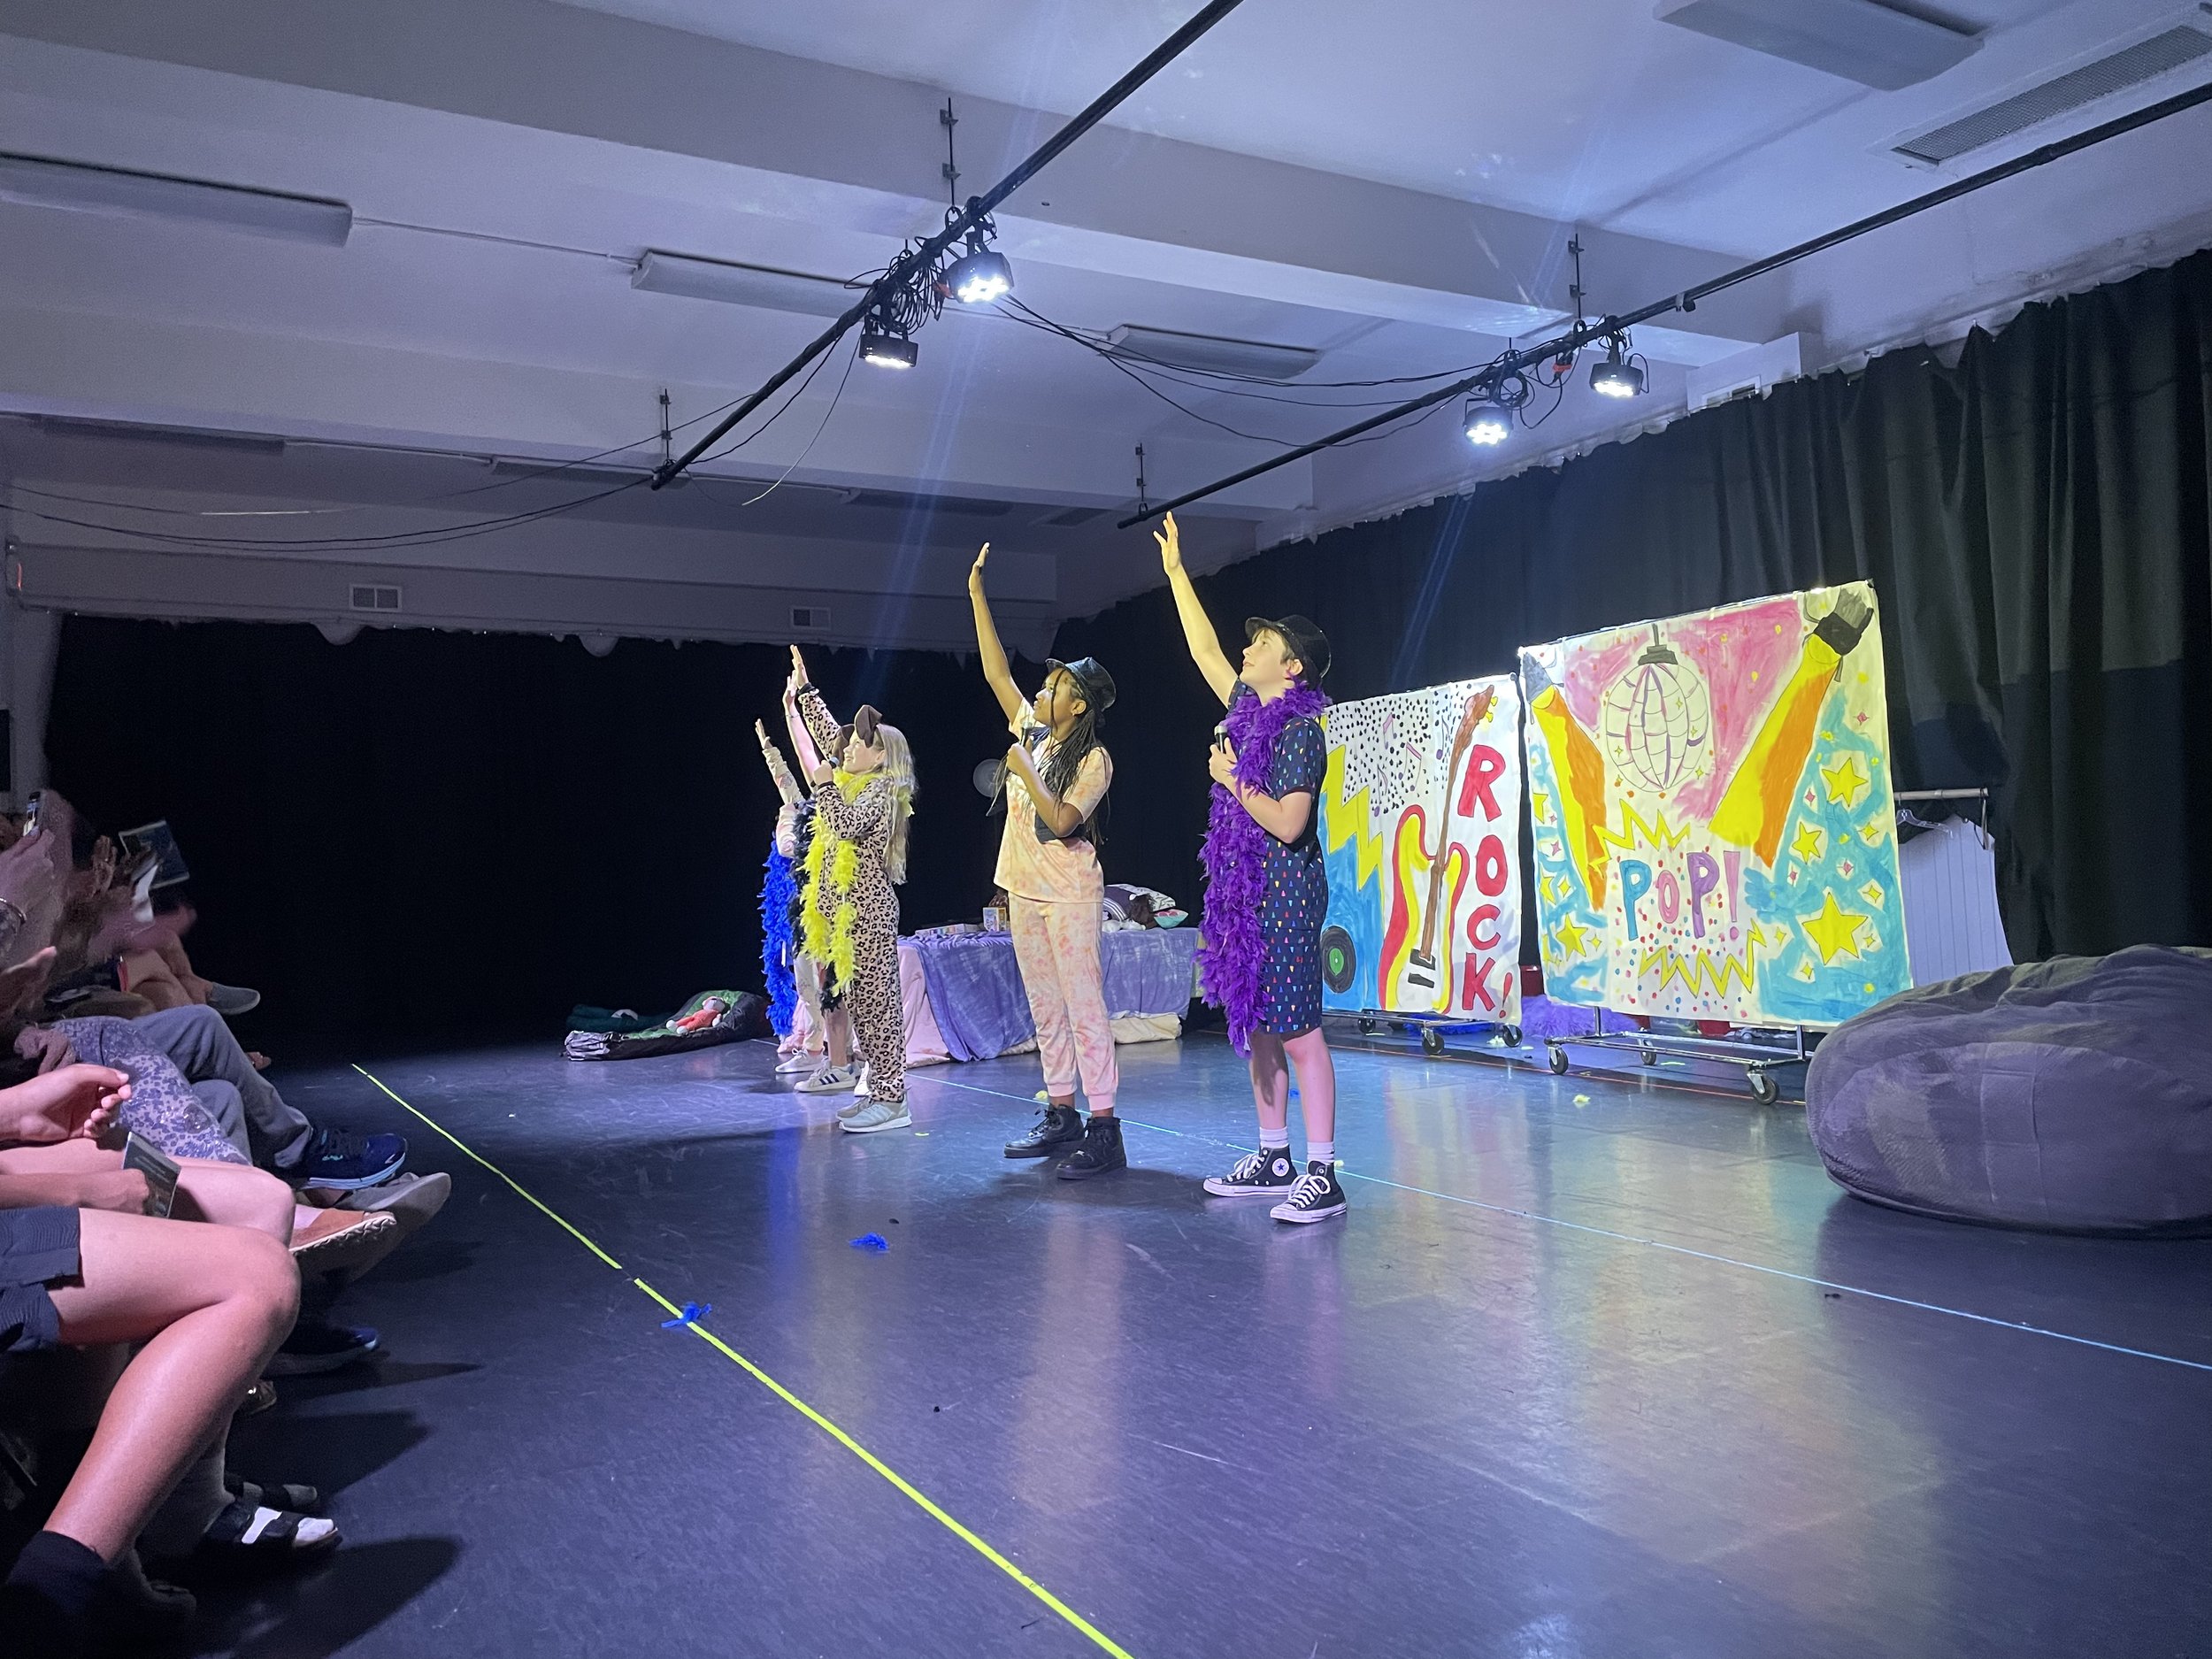 Musical Theatre — Class Act Performing Arts Studio